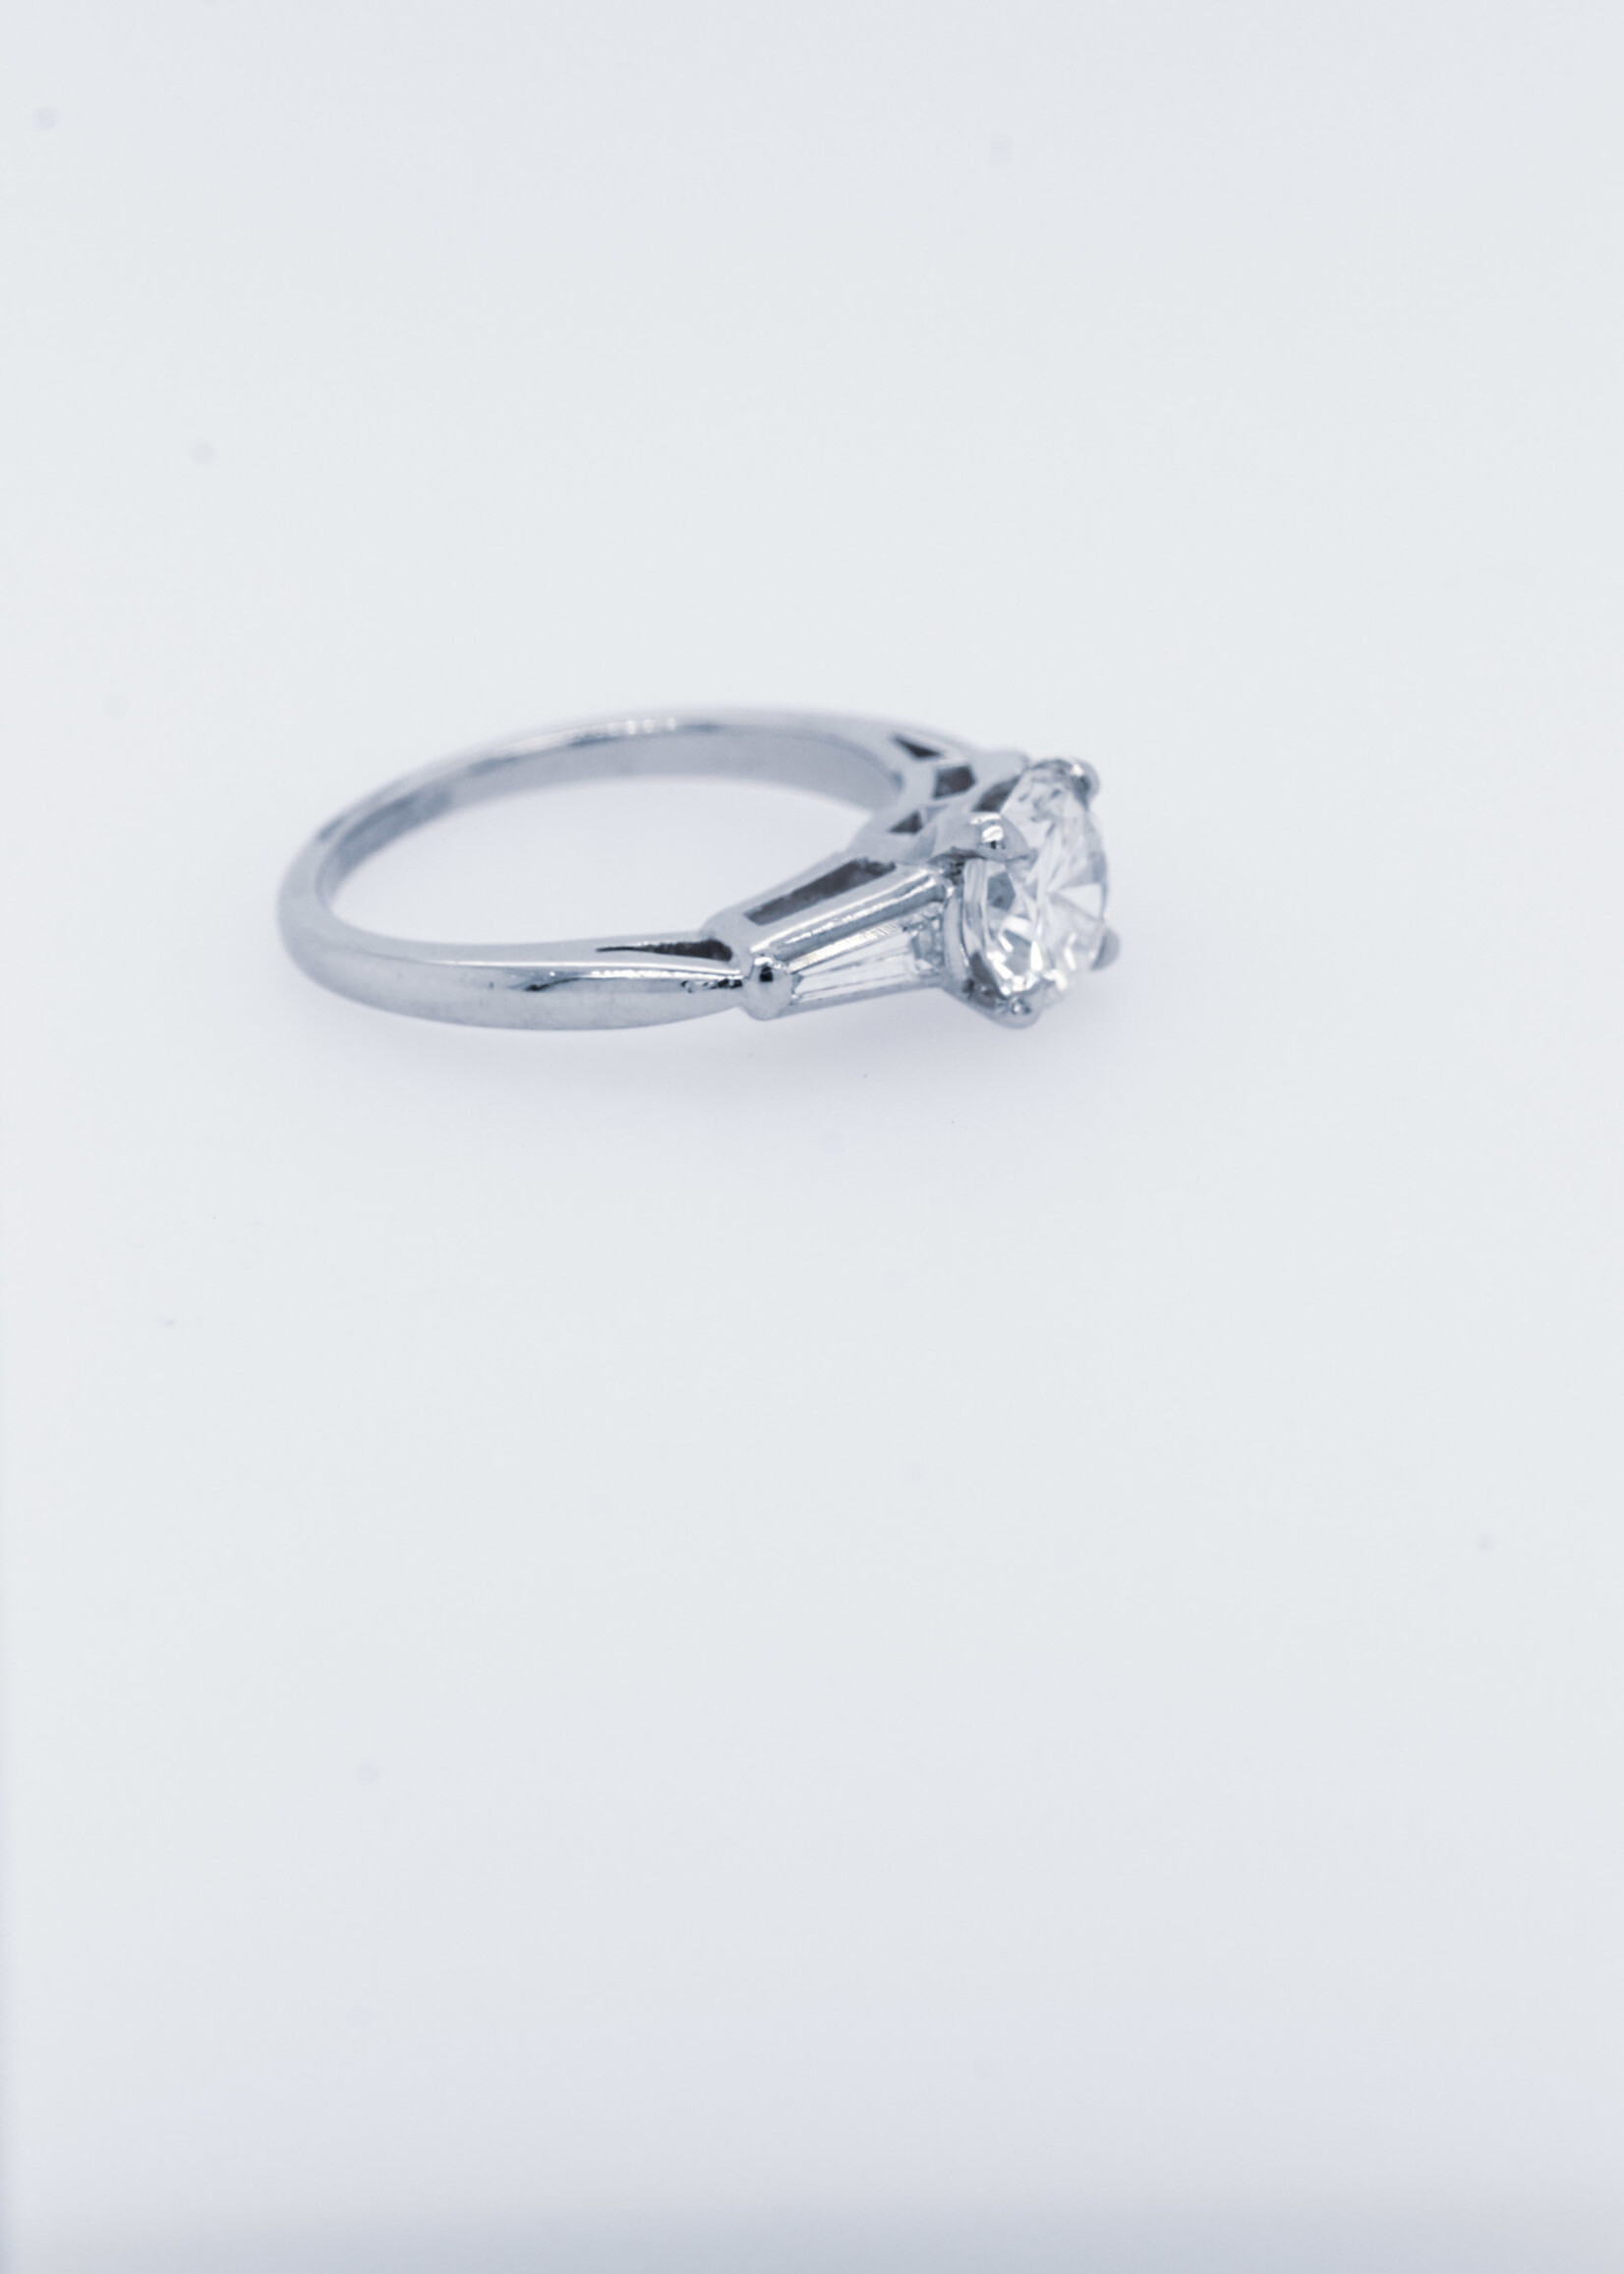 Platinum 1.34ctw (1.04ctr) H/SI2 Round Diamond & Baguette Engagement Ring (size 5.5)